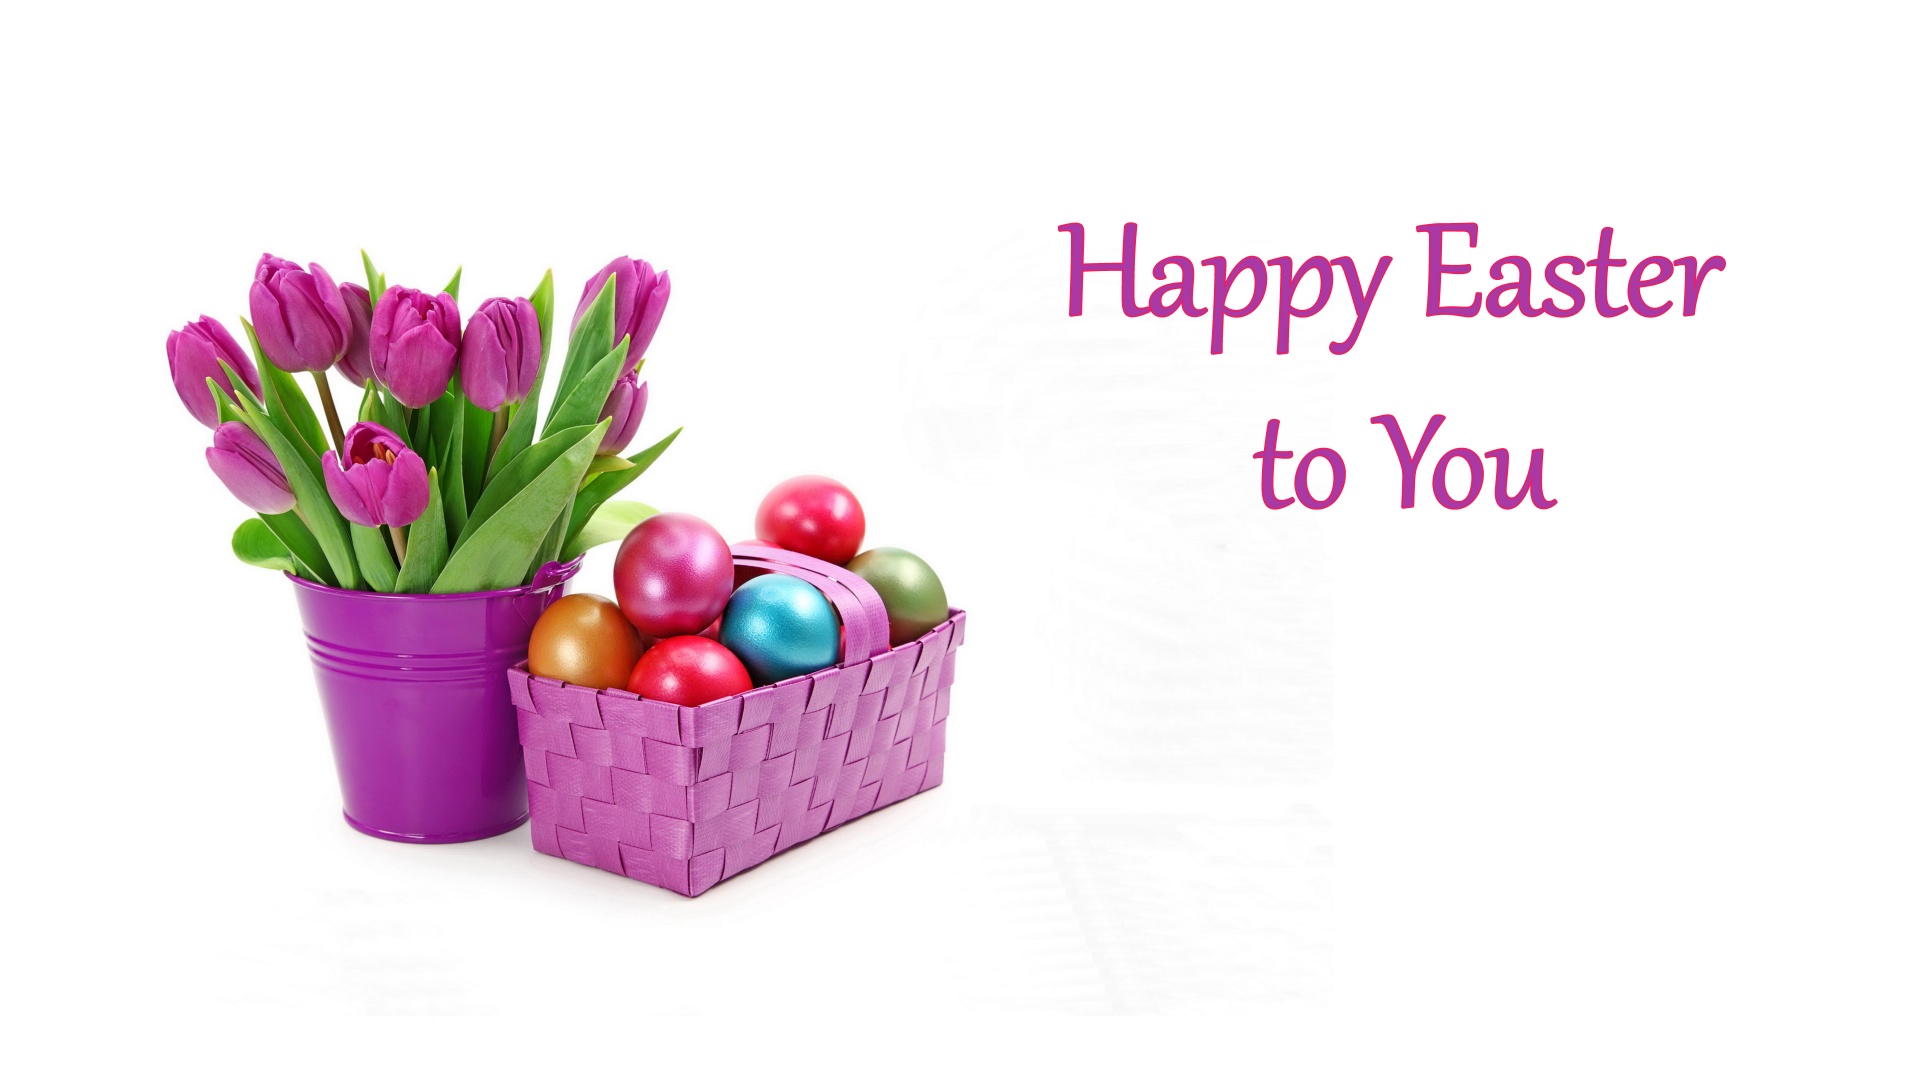 Descarga gratis la imagen Pascua, Flor Rosa, Día Festivo, Púrpura, Cesta, Tulipán, Felices Pascuas en el escritorio de tu PC